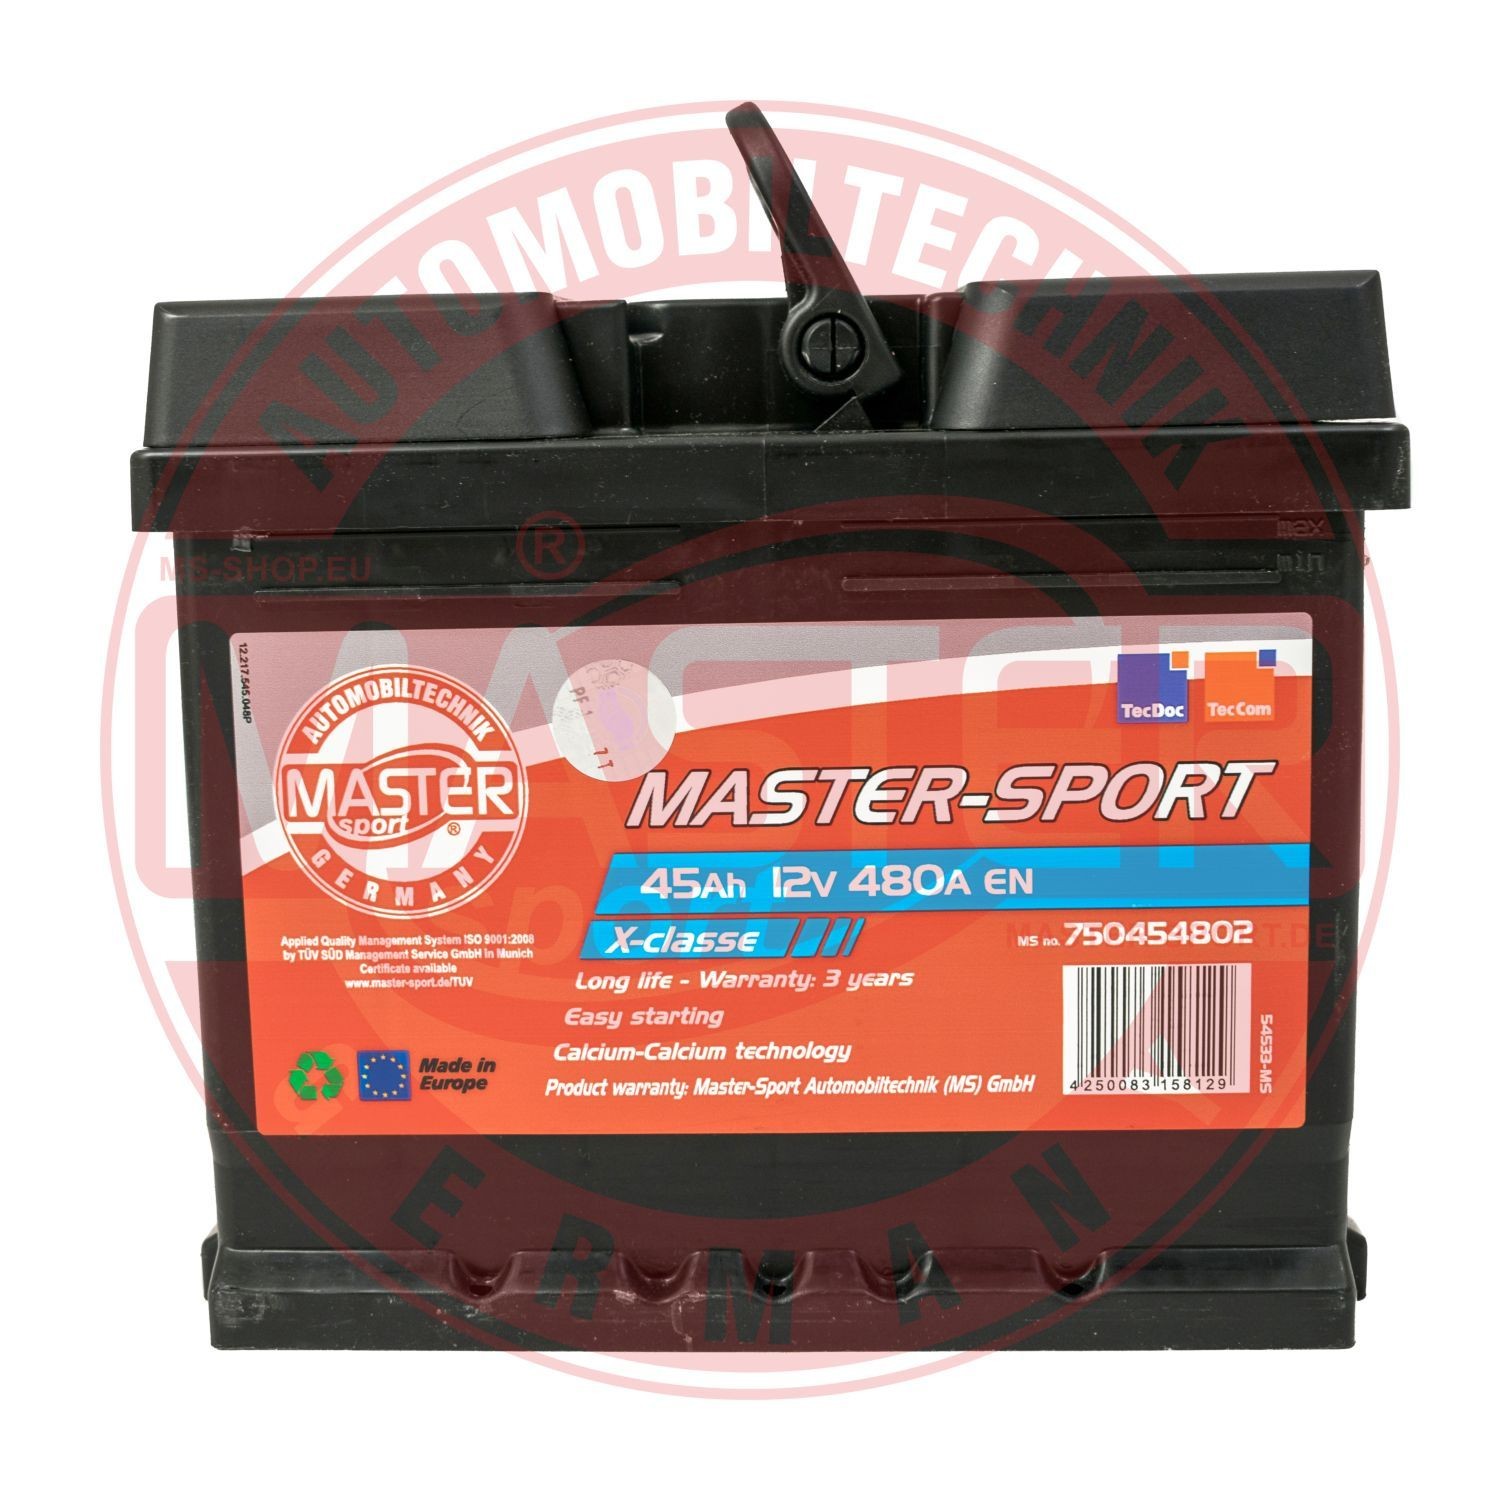 MASTER-SPORT Autobatterie Audi 780454802 in Original Qualität